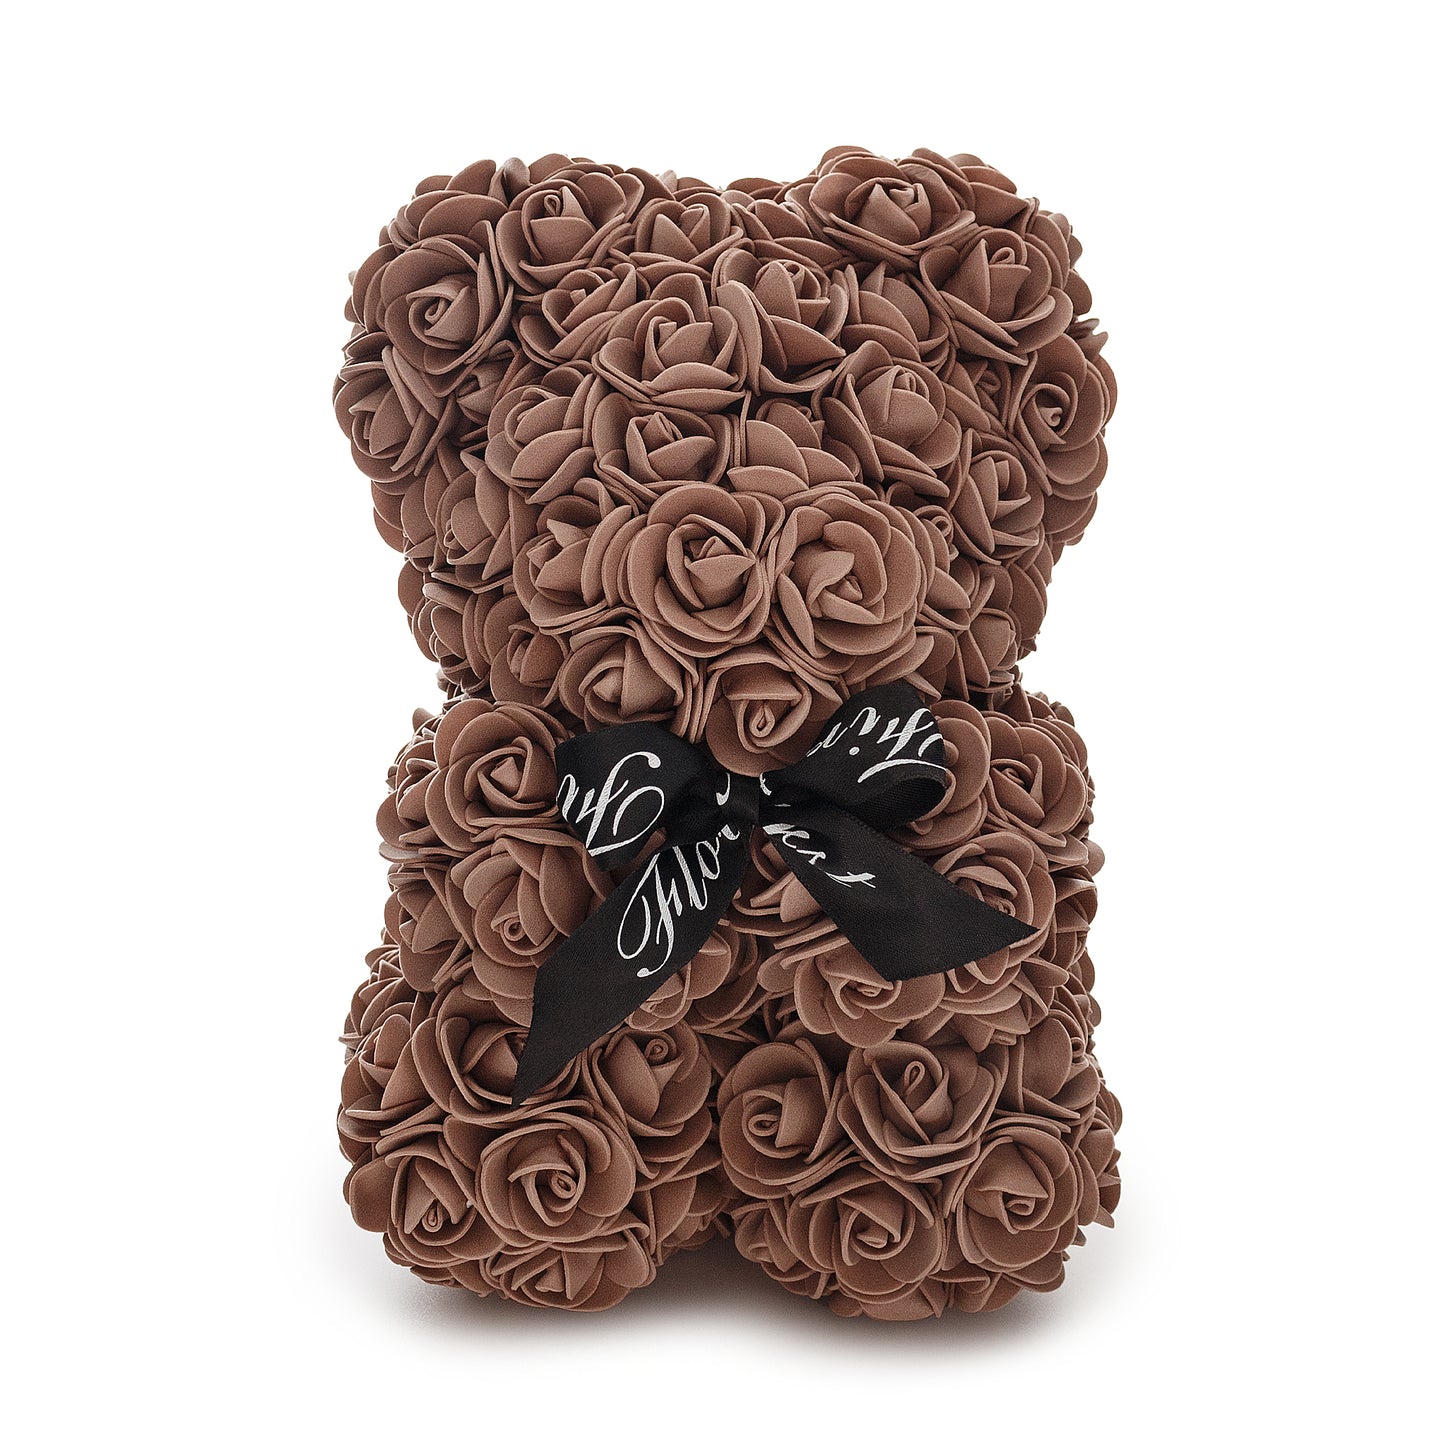 Brown Luxury Handmade Rose Teddy Bear